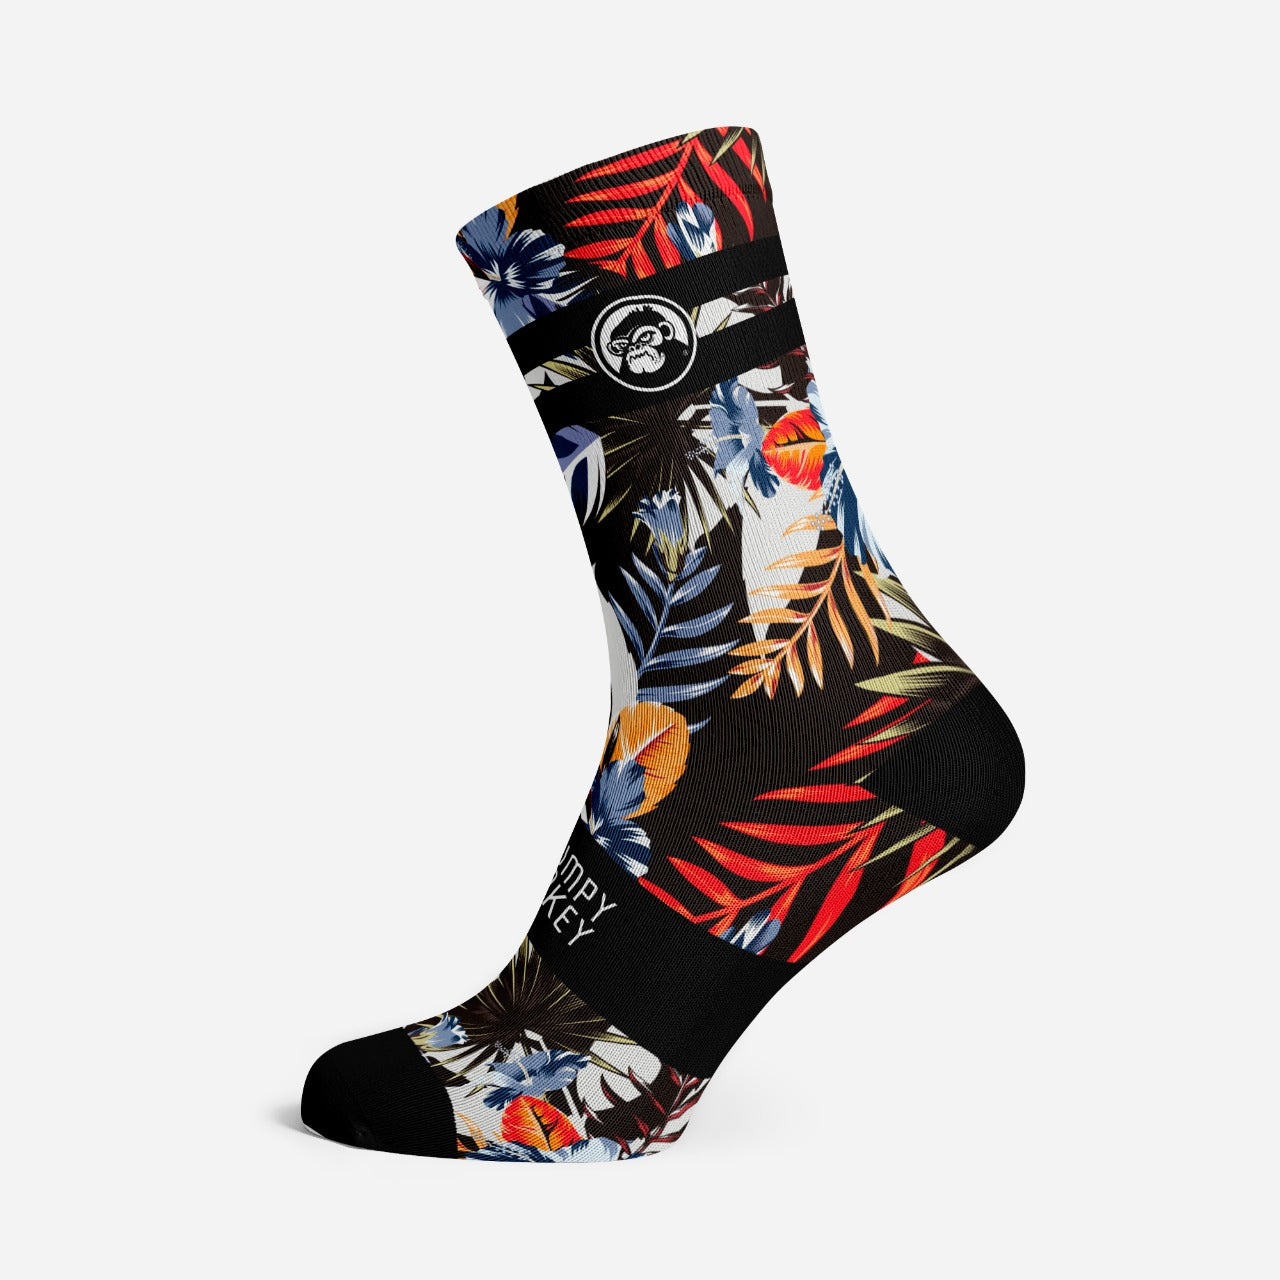 Grumpy Monkey - Premium Printed Socks